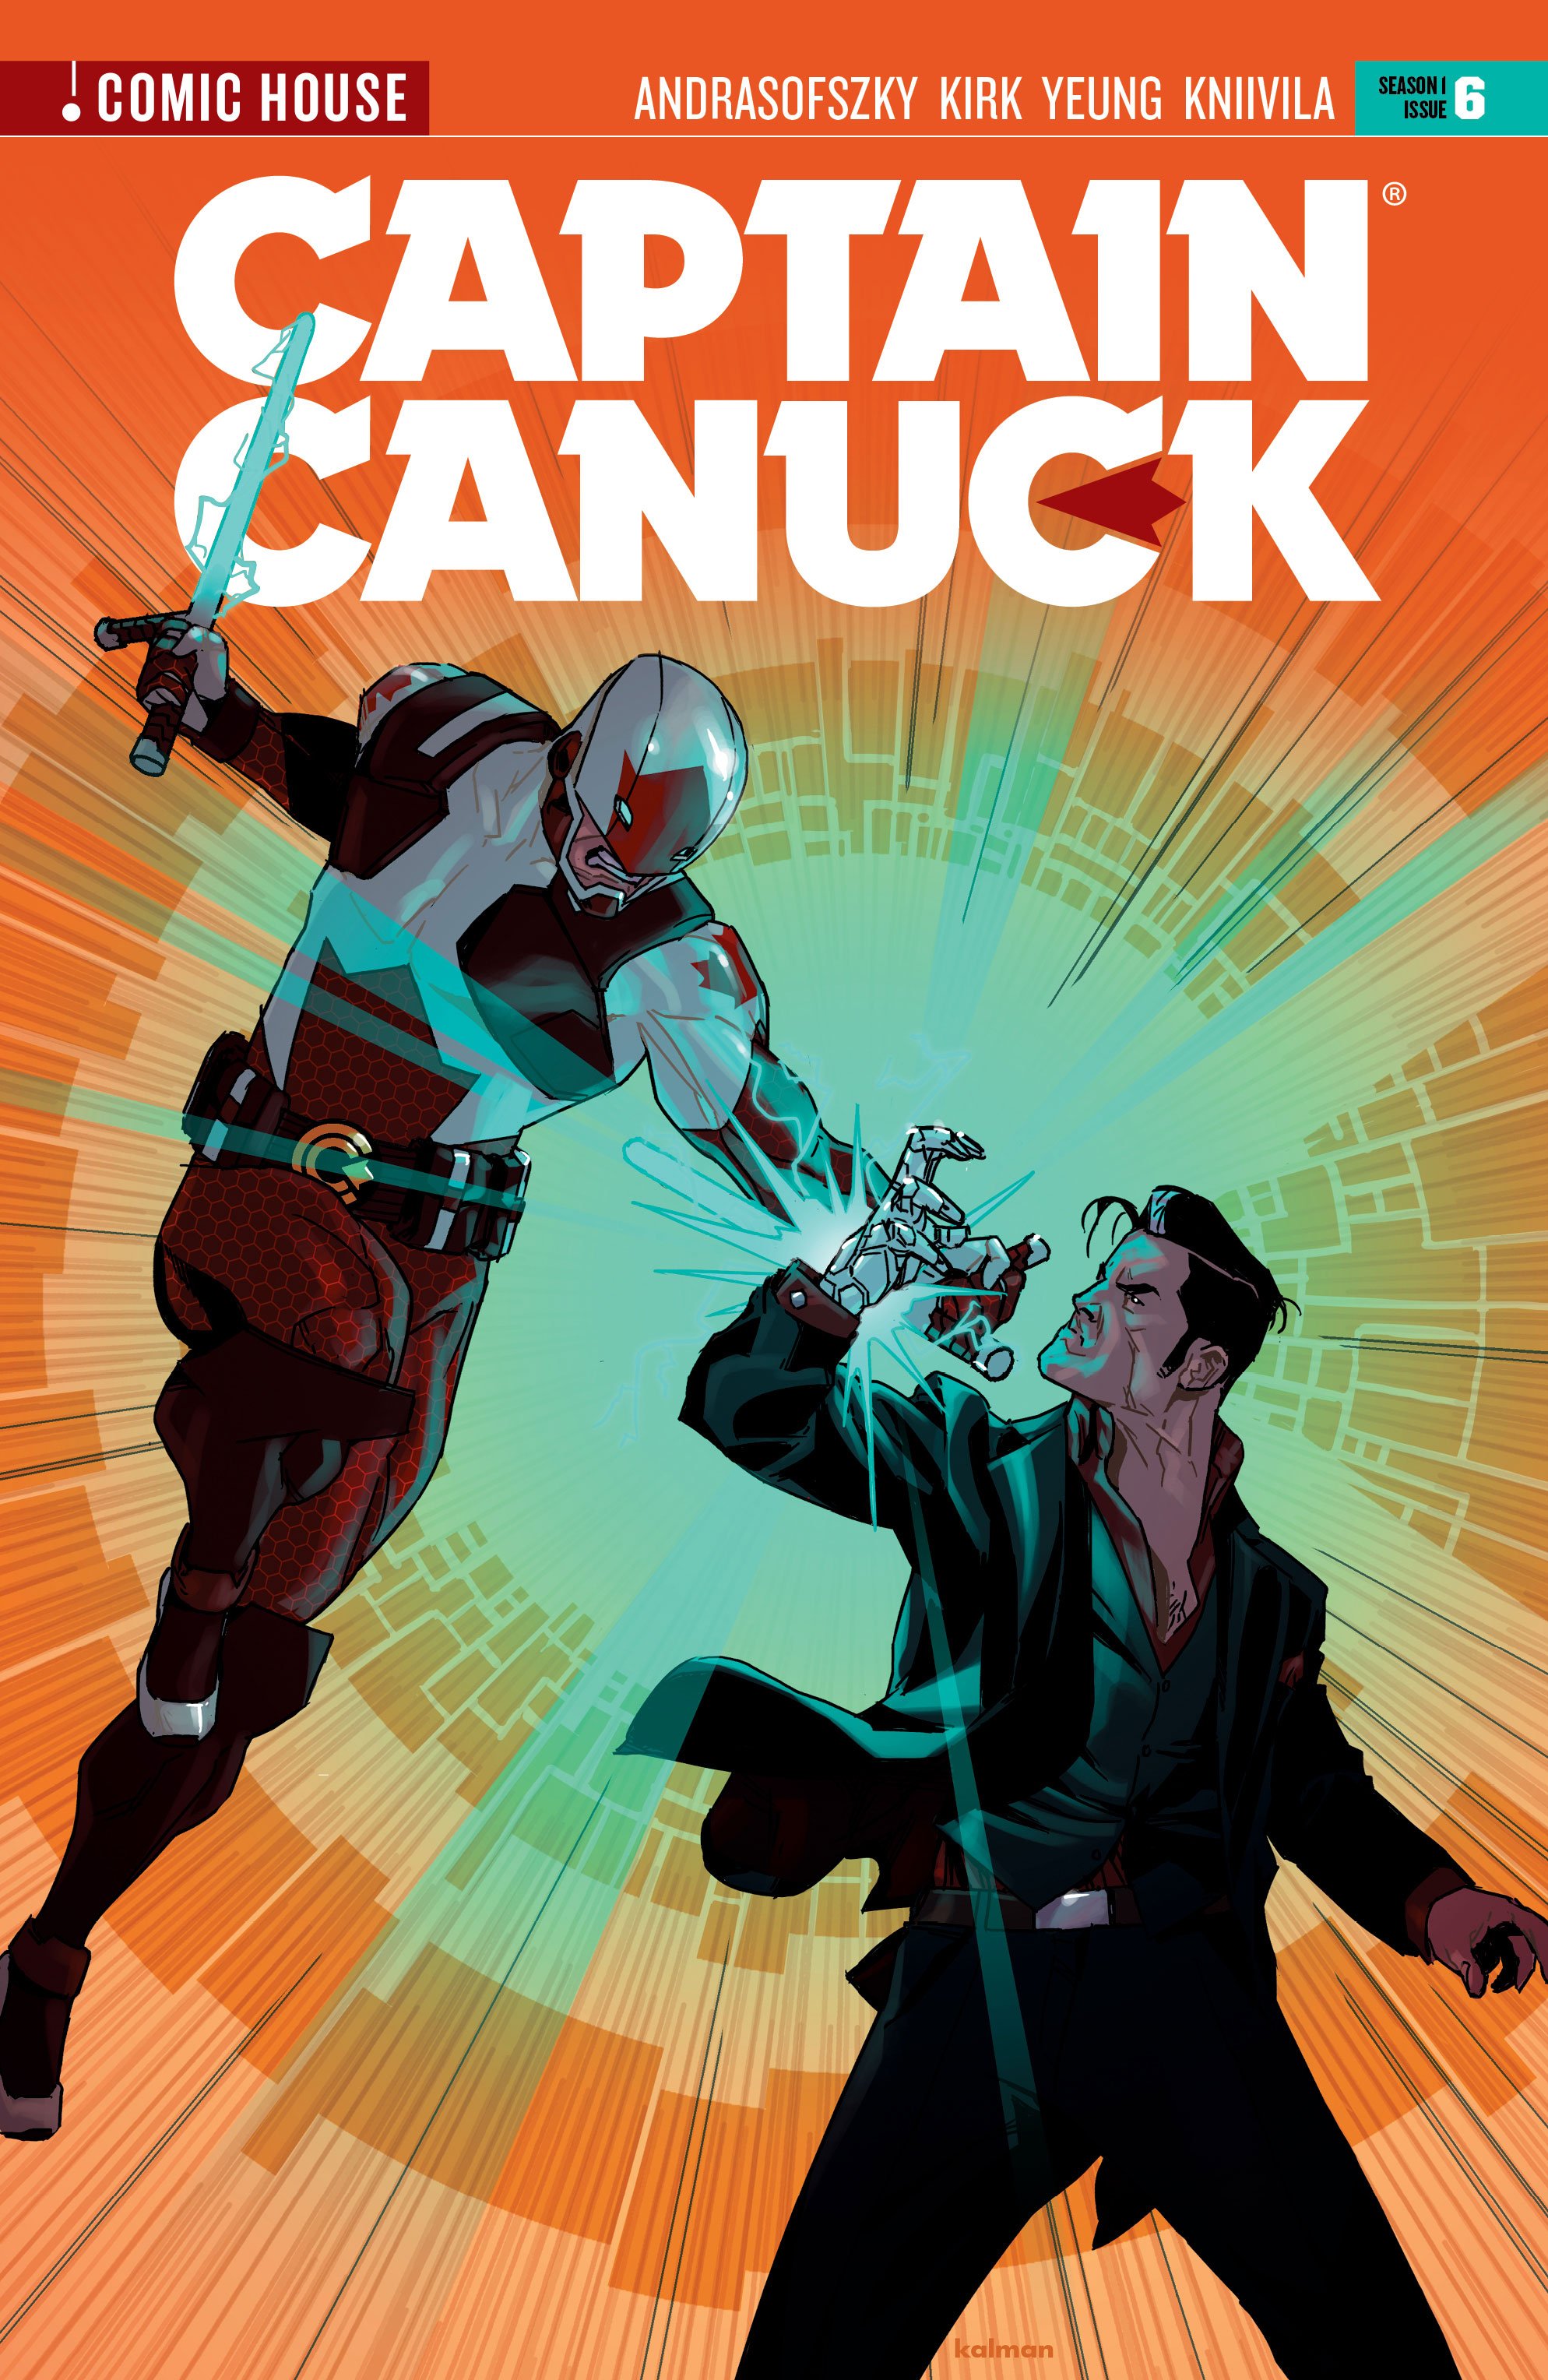 CaptainCanuck_006_S1_Issue6_cover-A.jpg